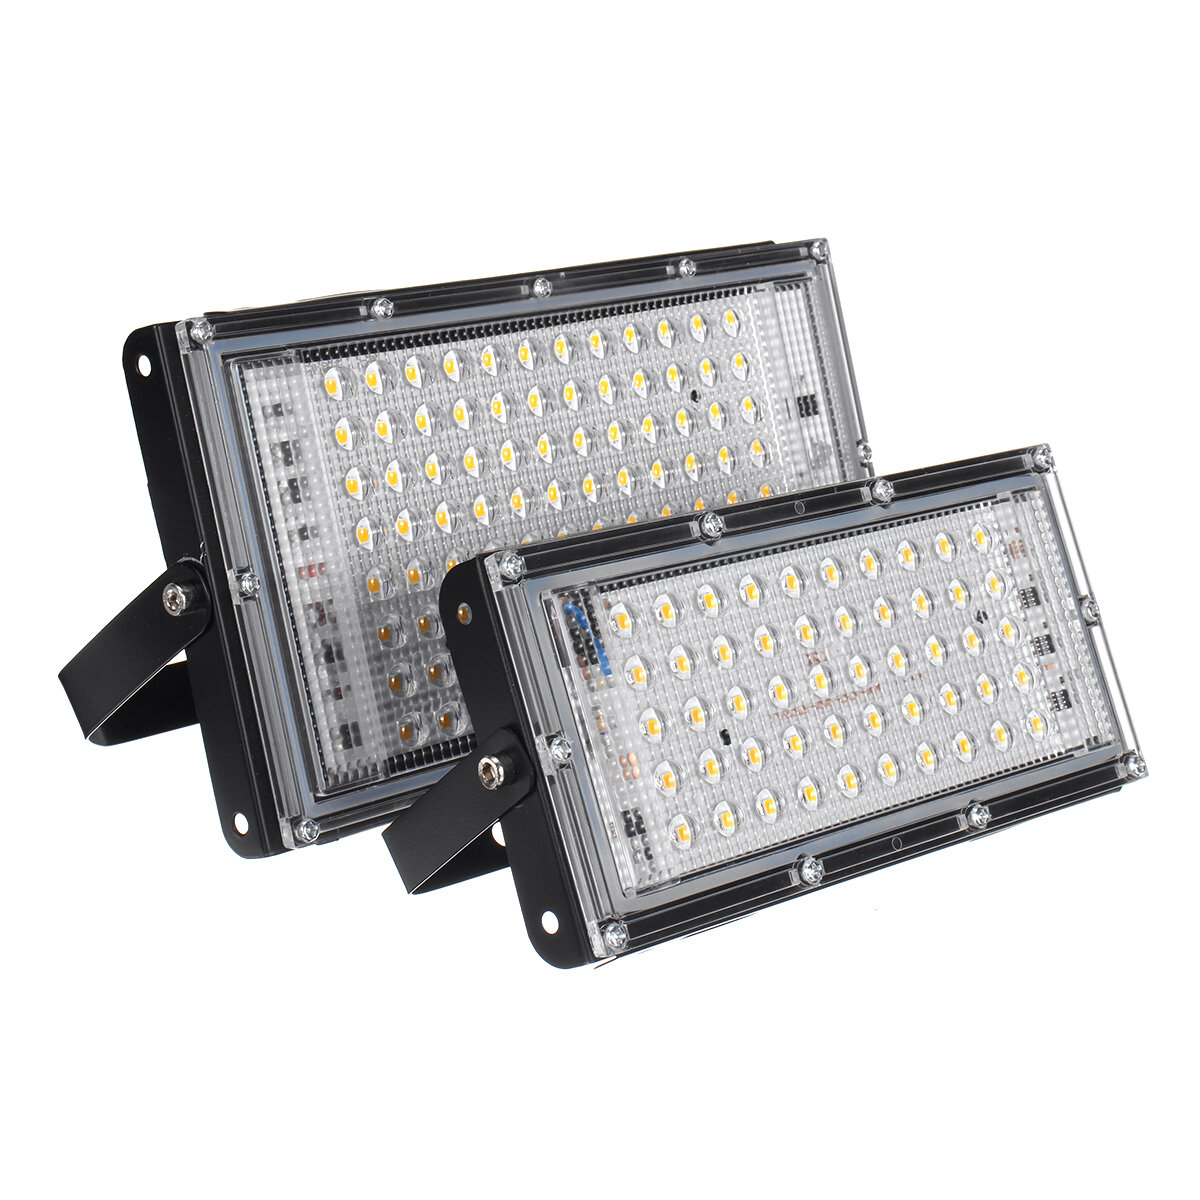 LEDフラッドライト屋外照明防水IP65リフレクタープロジェクターLEDフォーカススポットライト